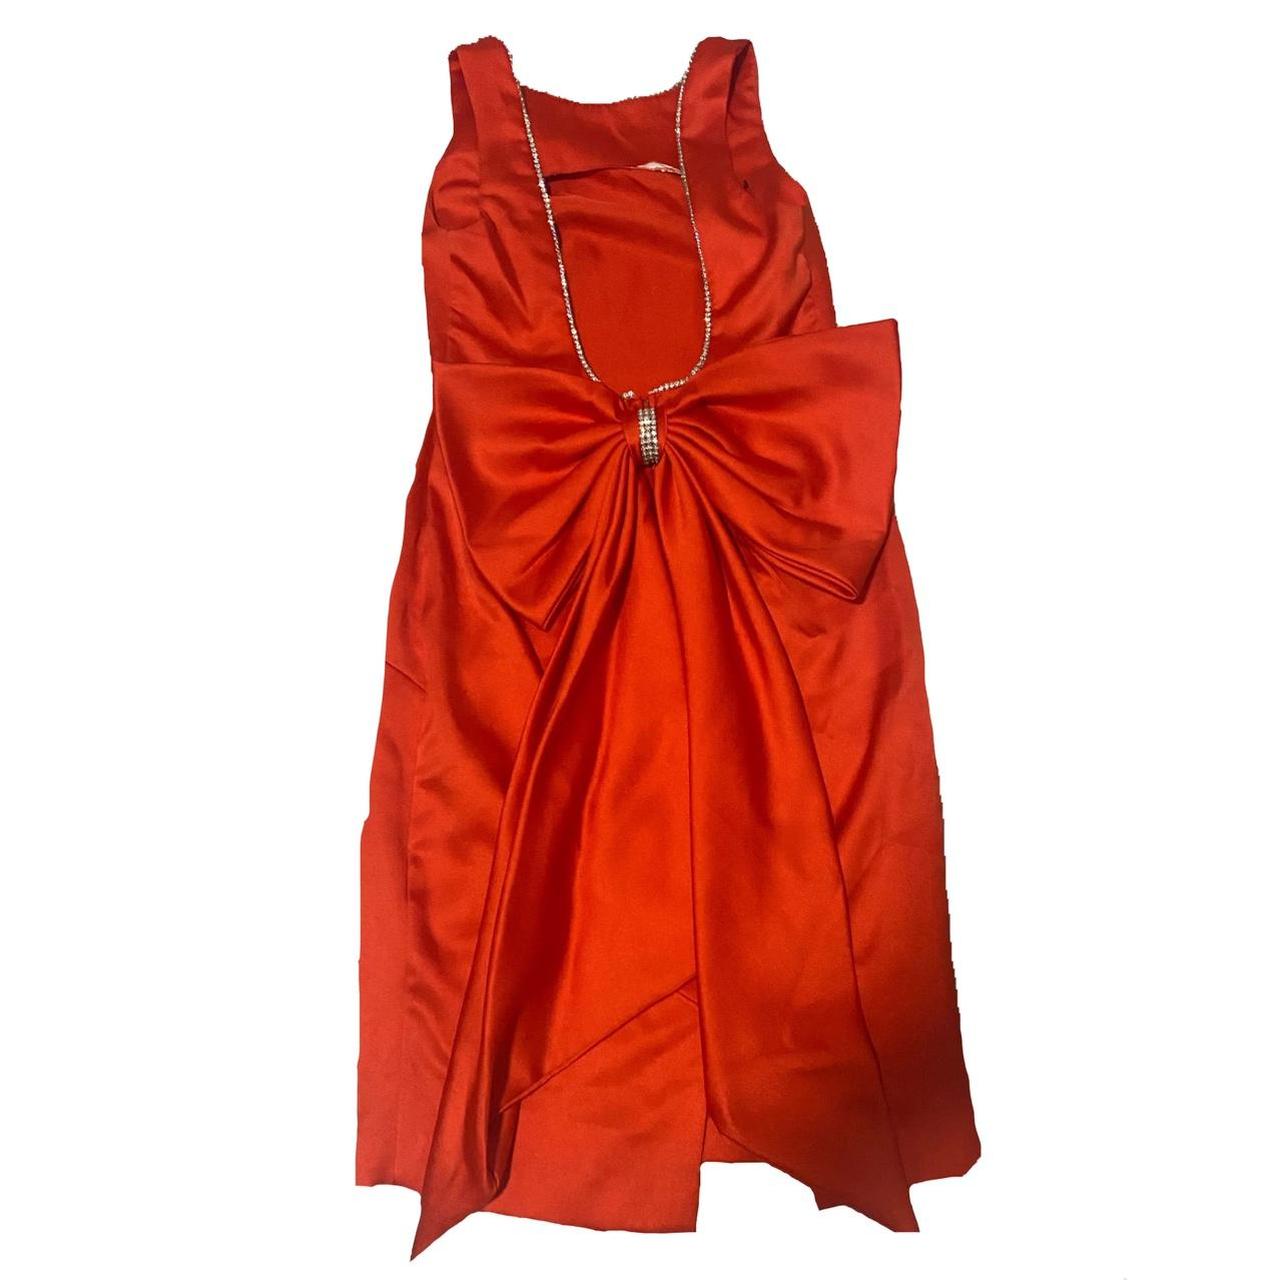 3LAB Women's Red and Orange Dress (2)